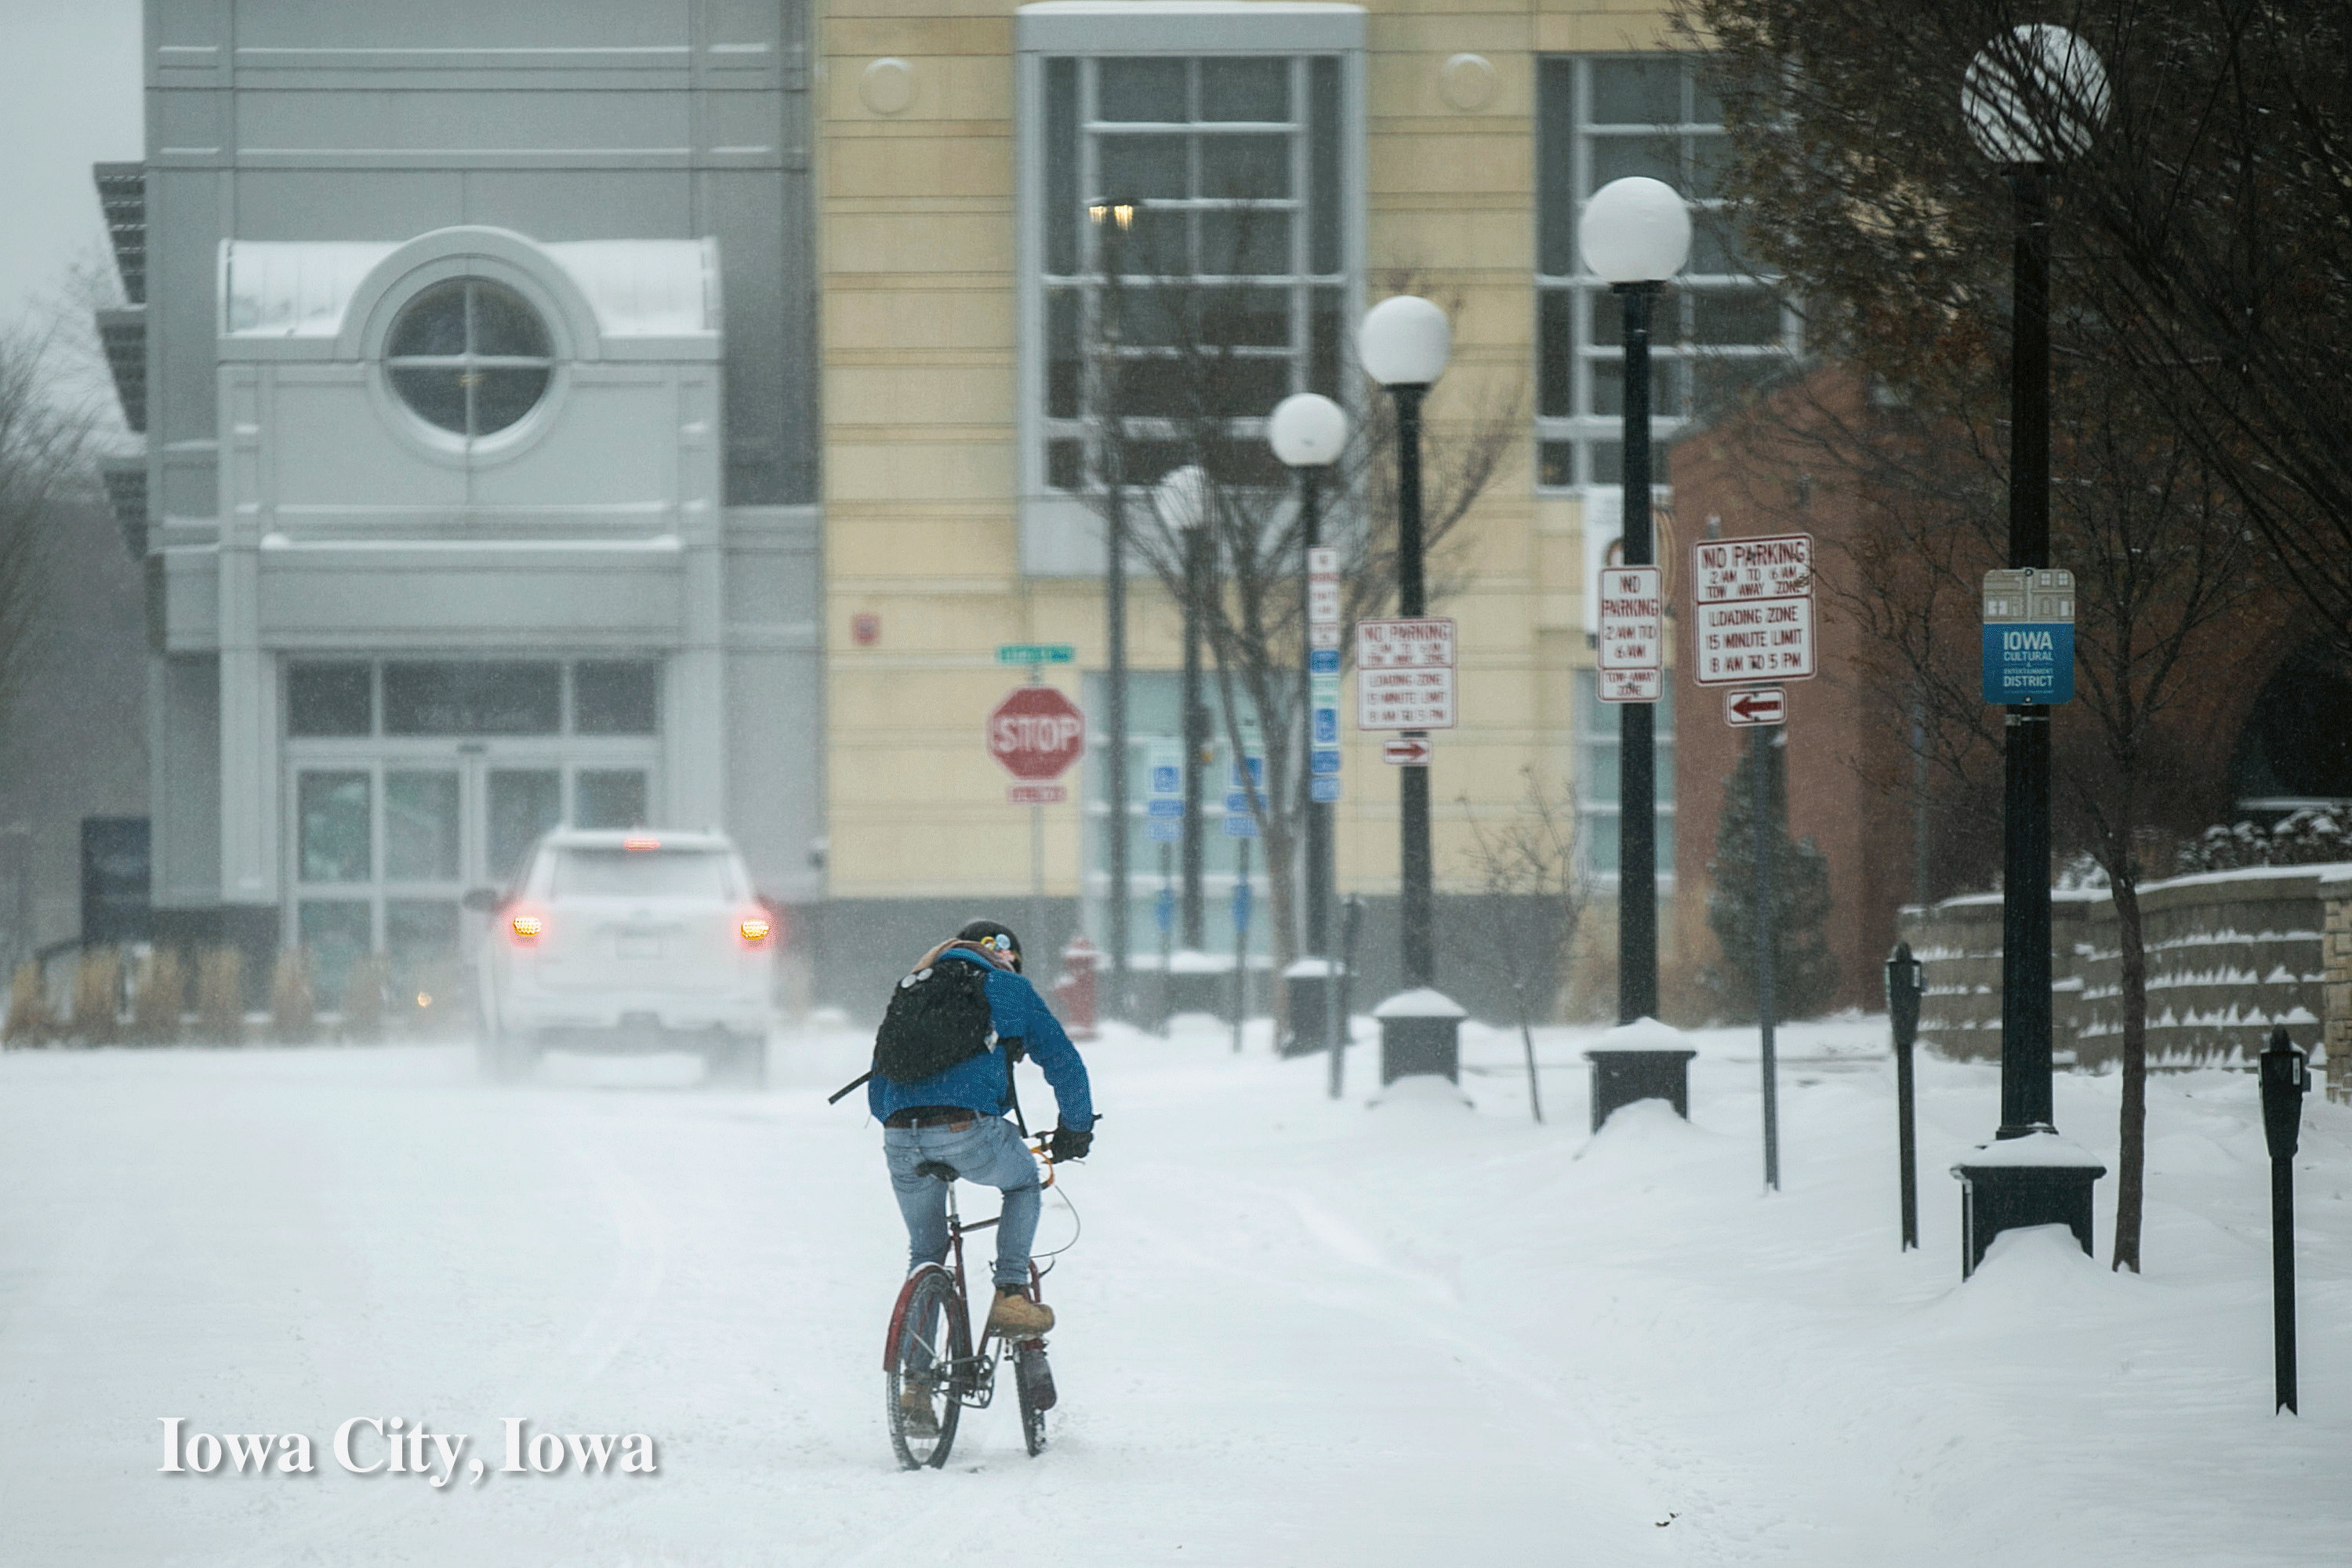 Snowy street in Iowa City, Iowa and cyclists riding around Shoreline Aquatic Park in Long Beach